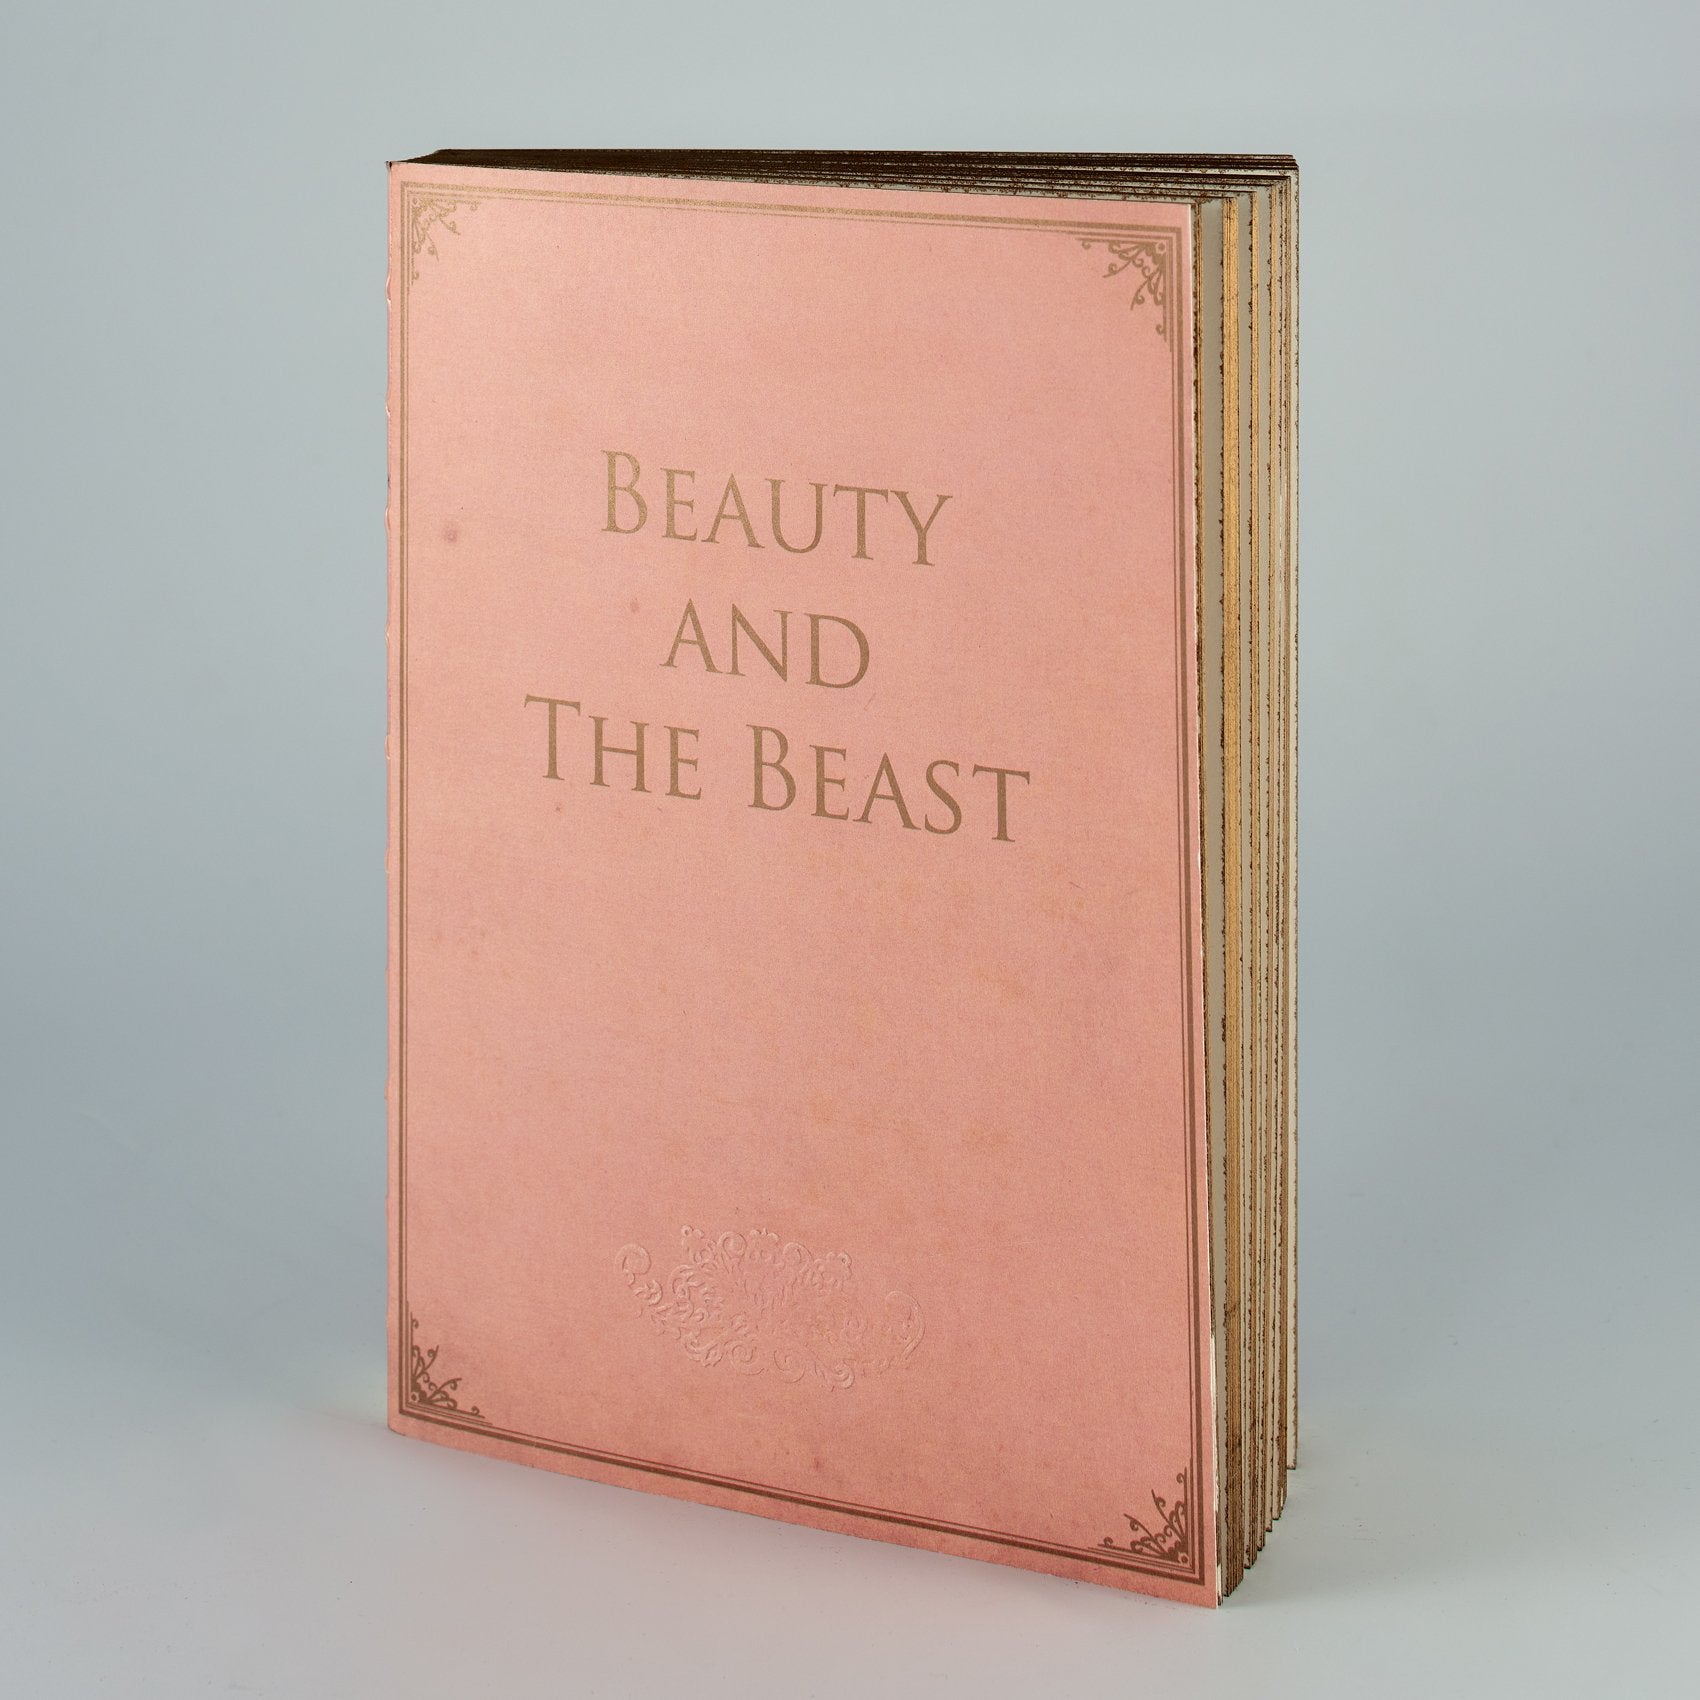 Billede af BEAUTY & THE BEAST - NOTESBOG - LIBRI MUTI - notesbog - Slow Design - StudioBuus